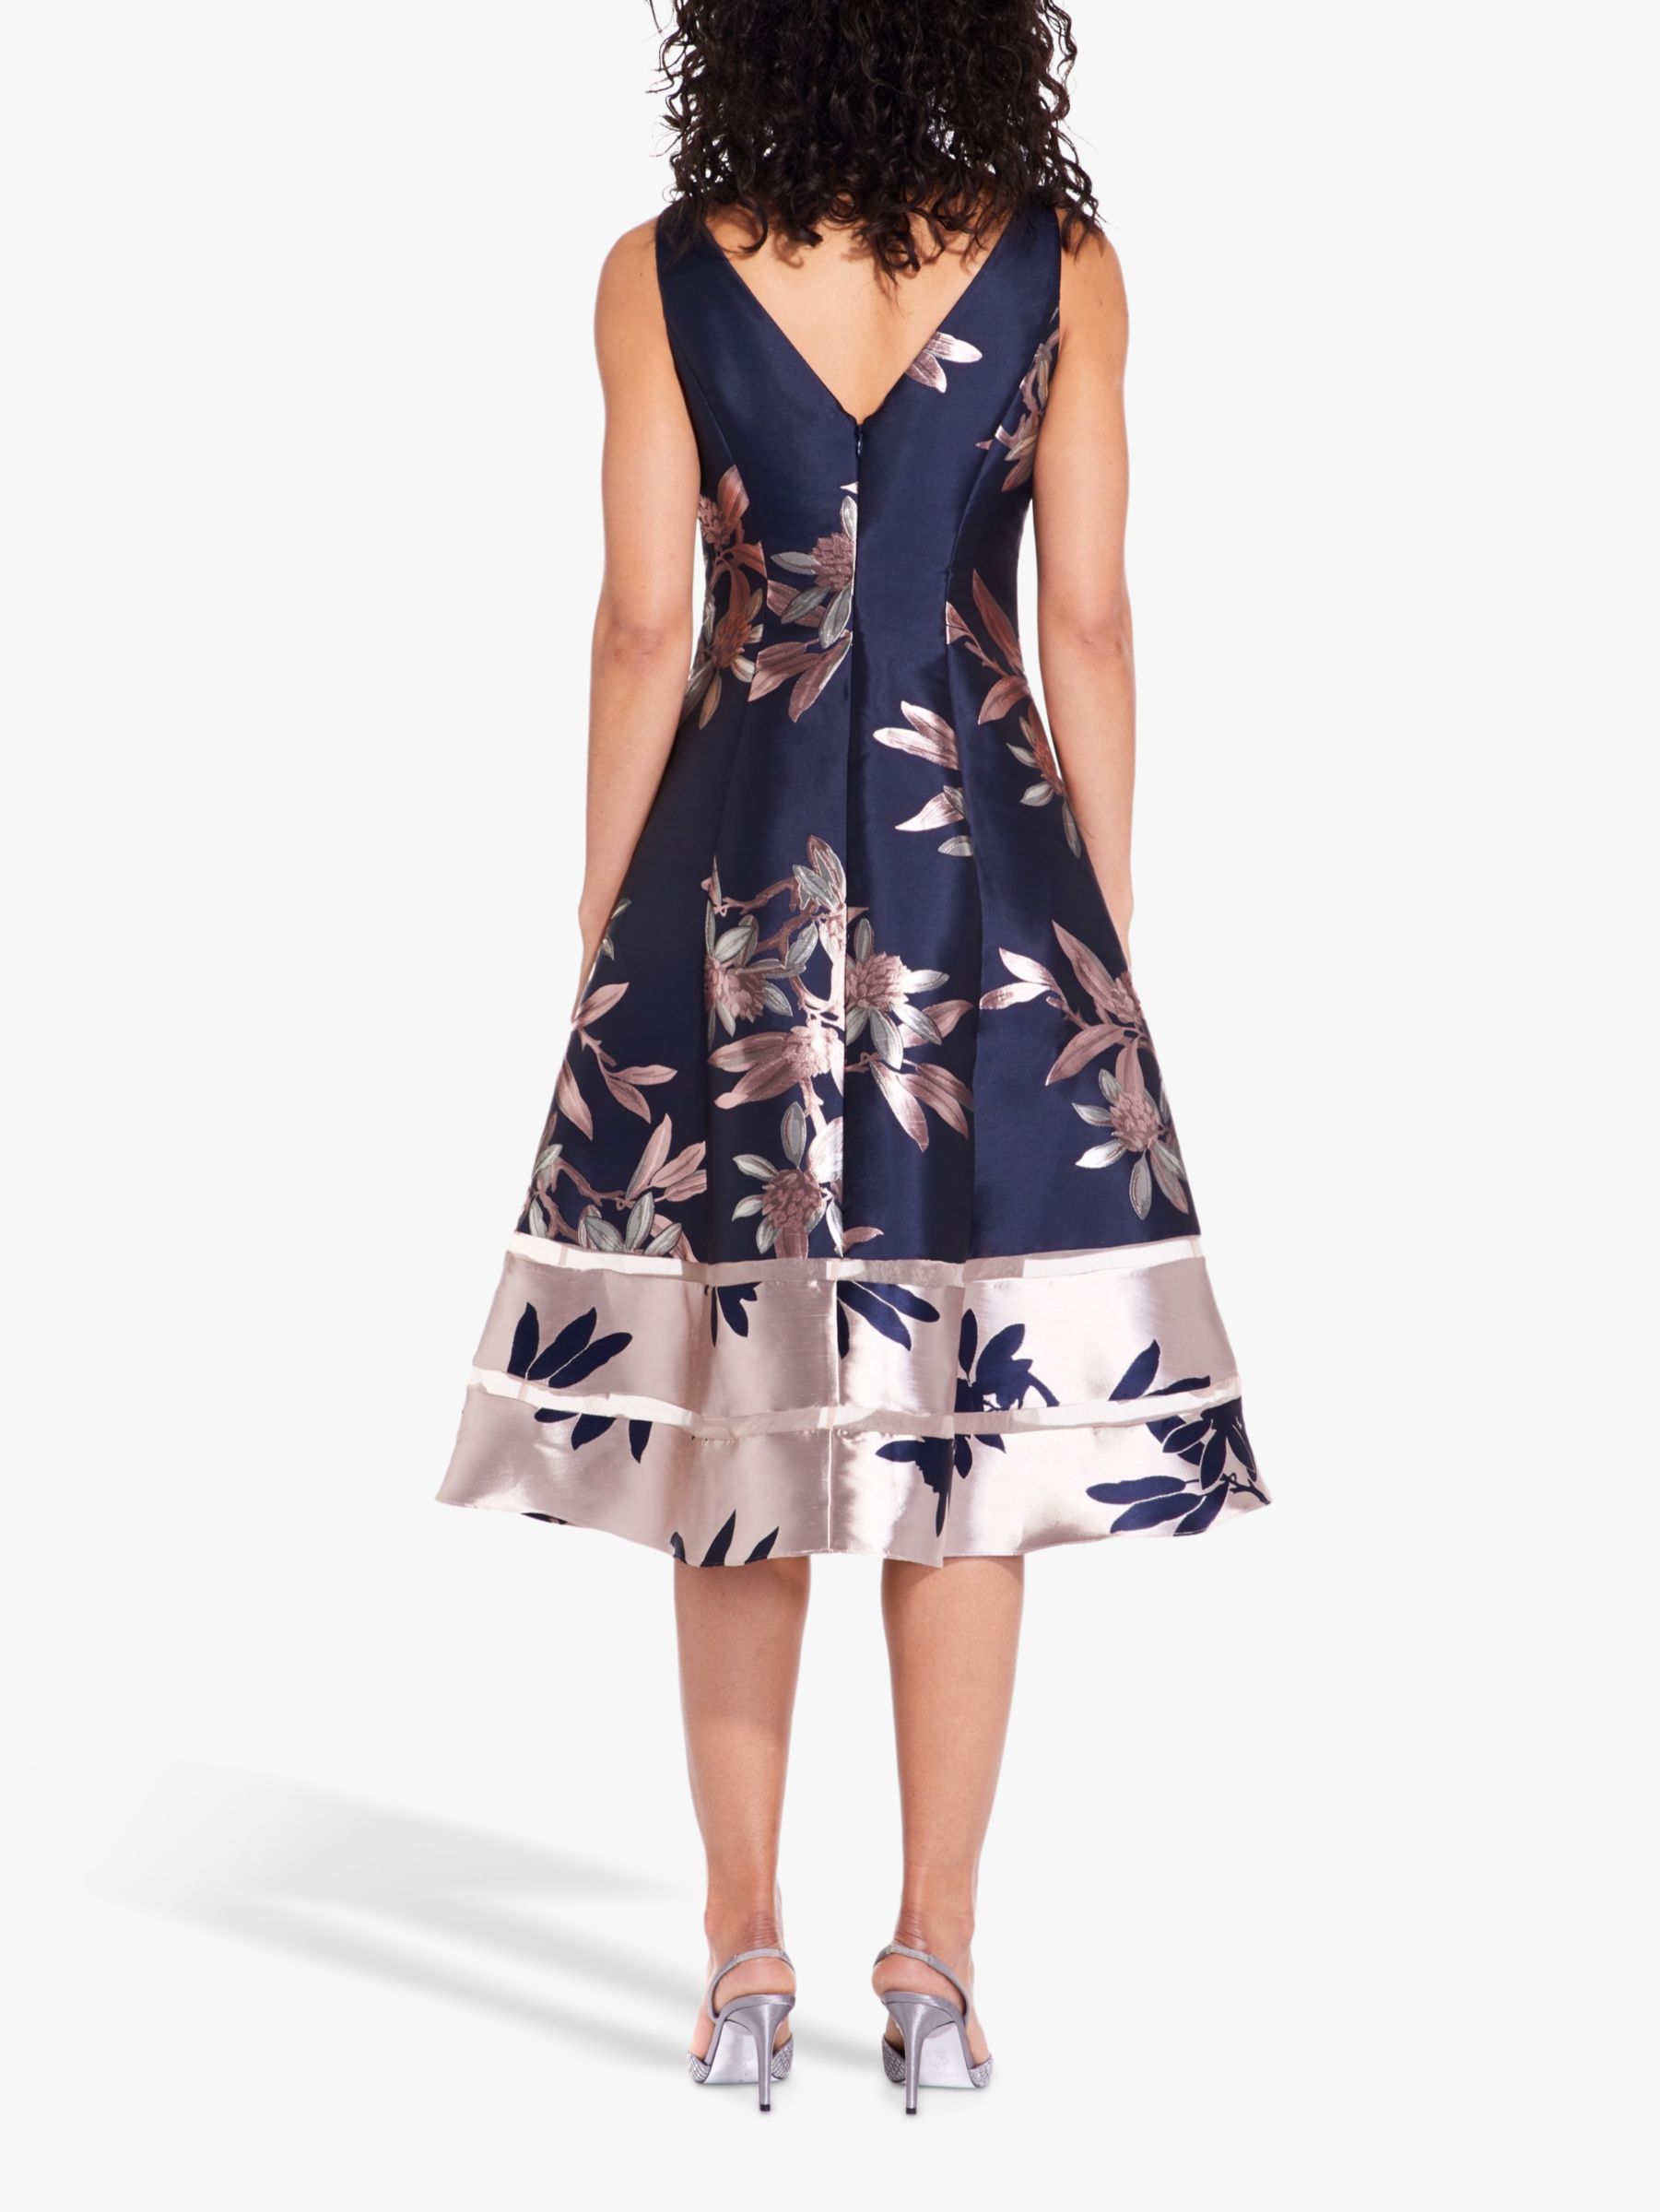 Adrianna Papell Floral Jacquard Dress, Navy/Blush, 6